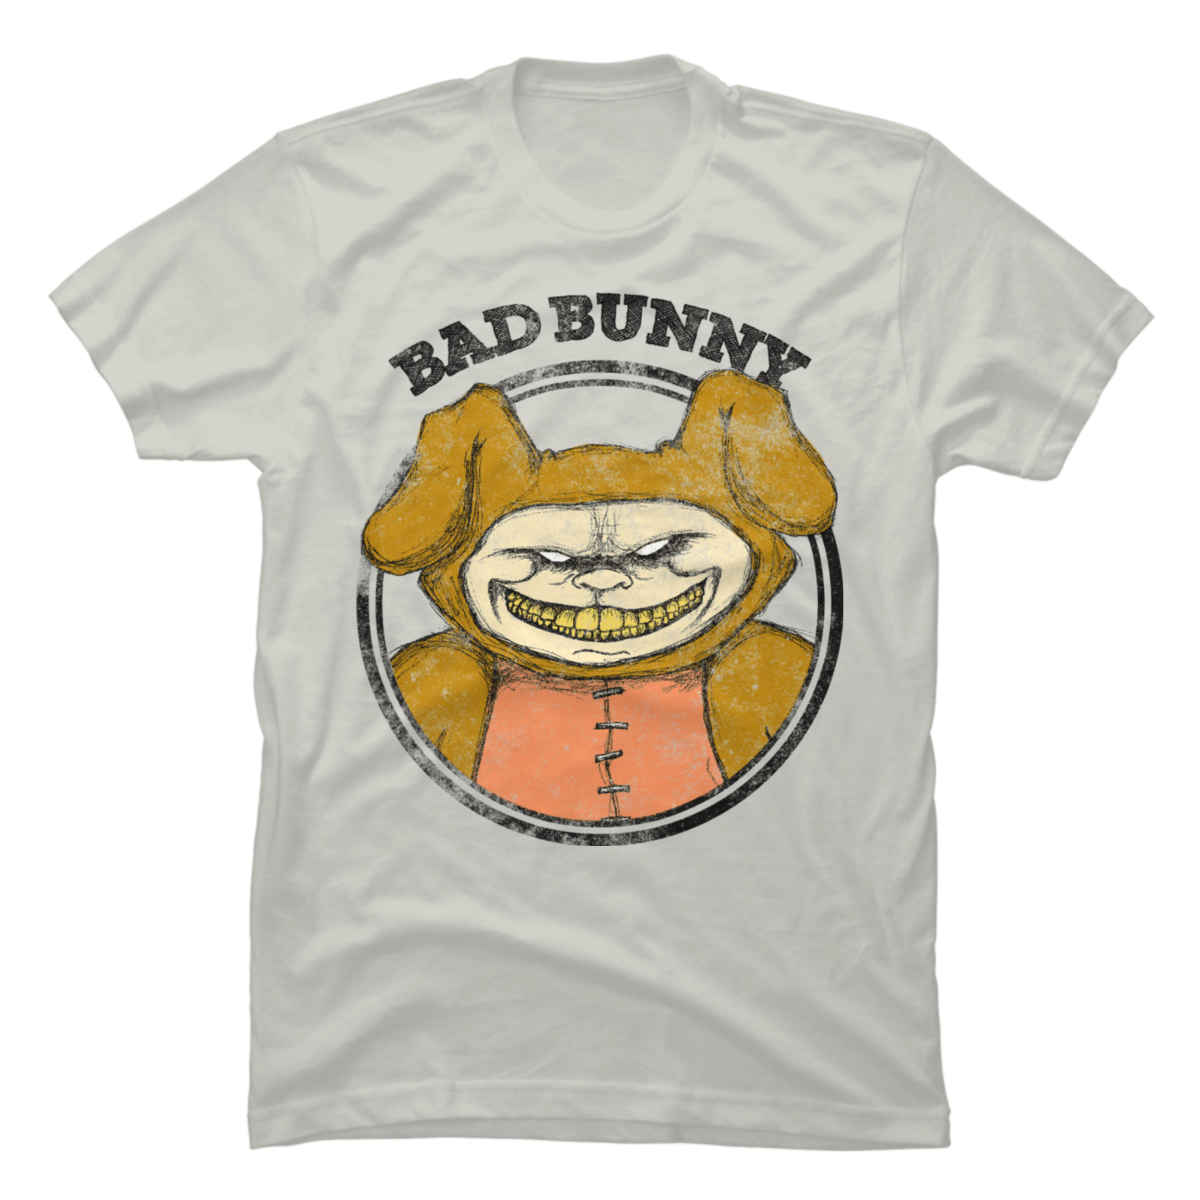 bad bunny t shirt design